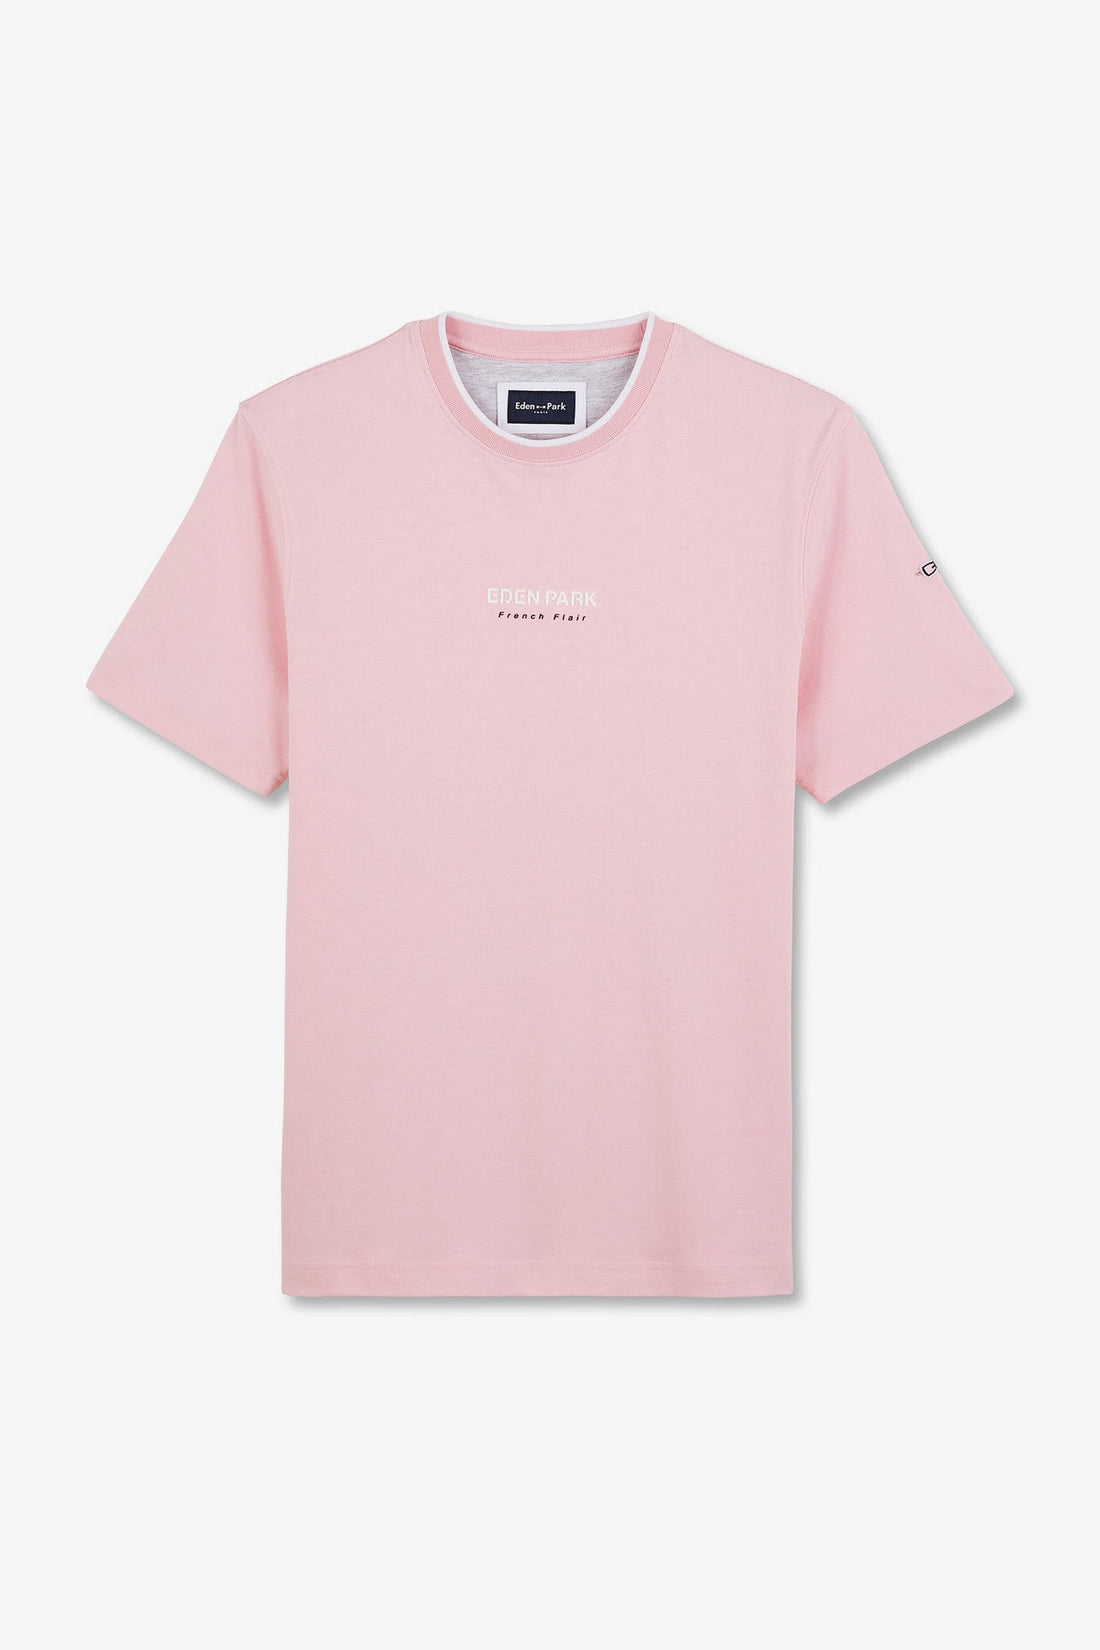 Plain Pink Short-Sleeved T-Shirt_E24MAITC0018_ROC16_02